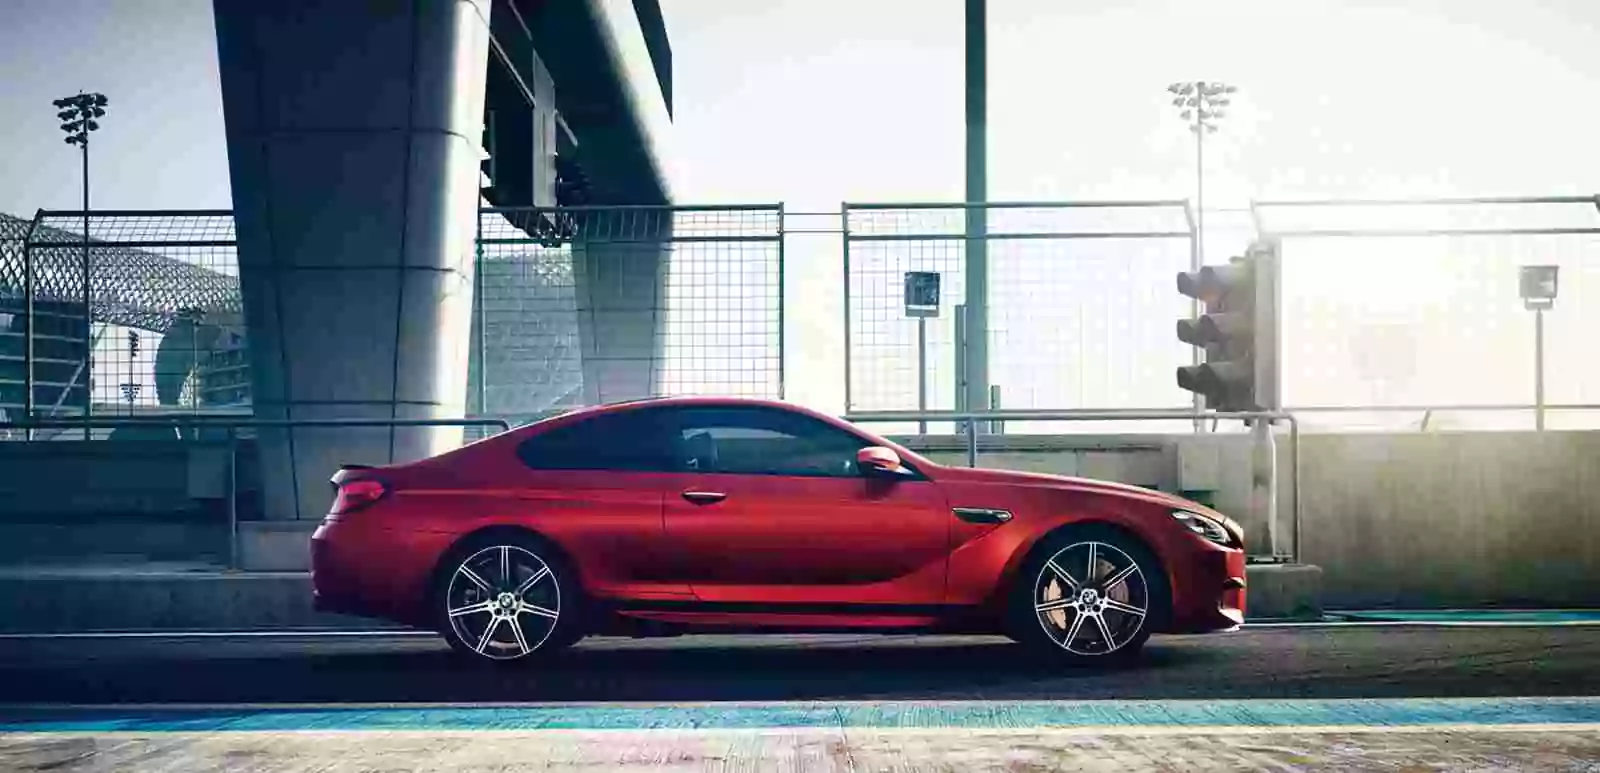 BMW M6 On Hire Dubai 